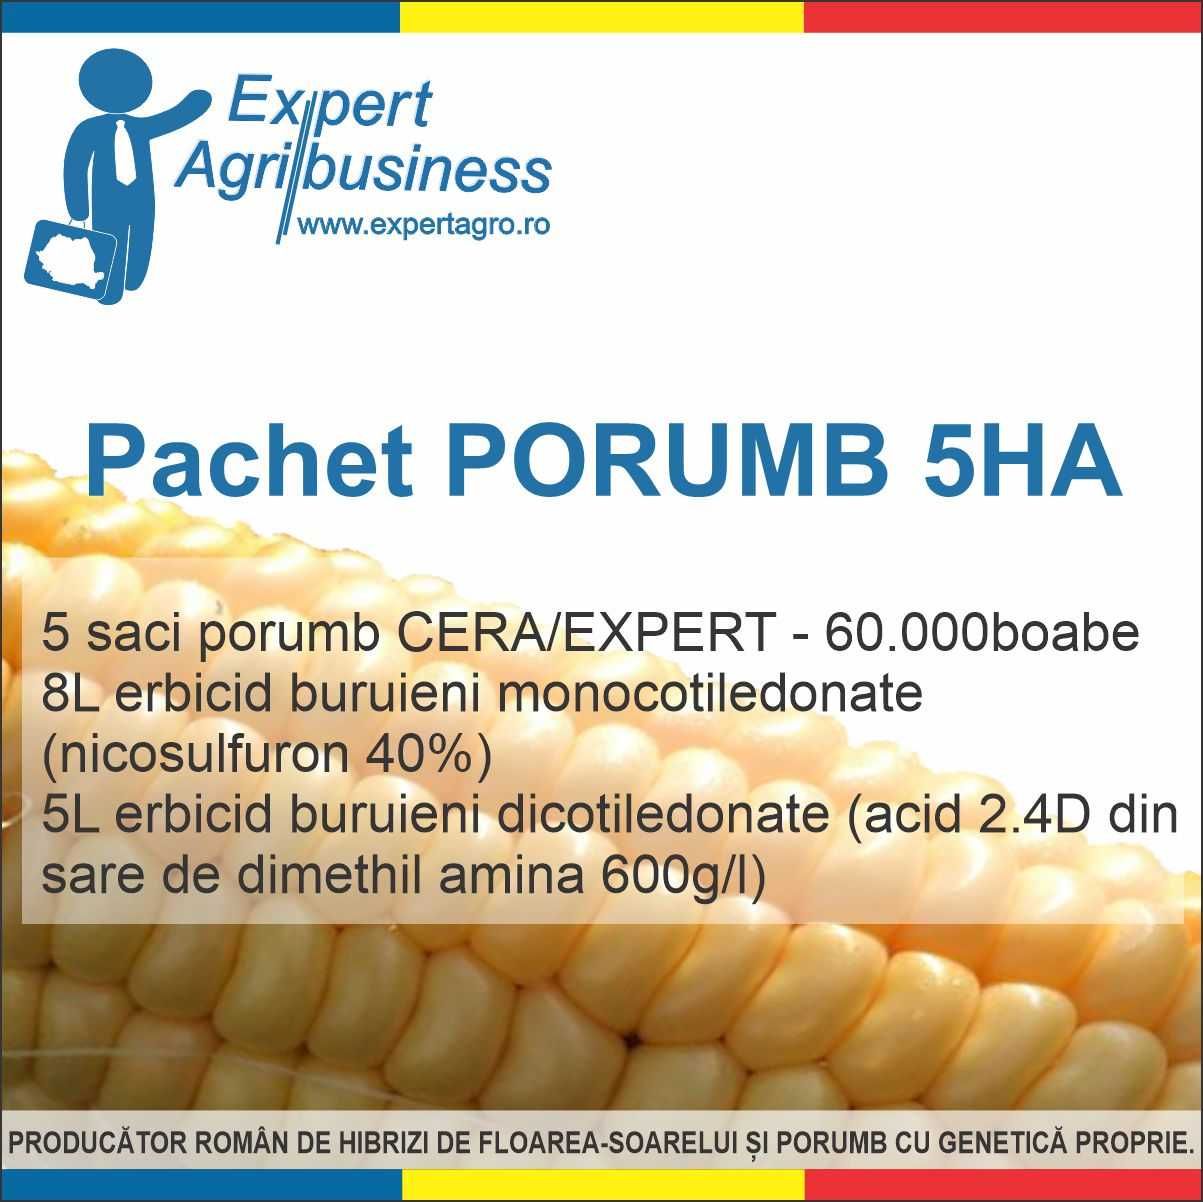 Pachet Porumb CERA \ EXPERT 5HA fao 320-450